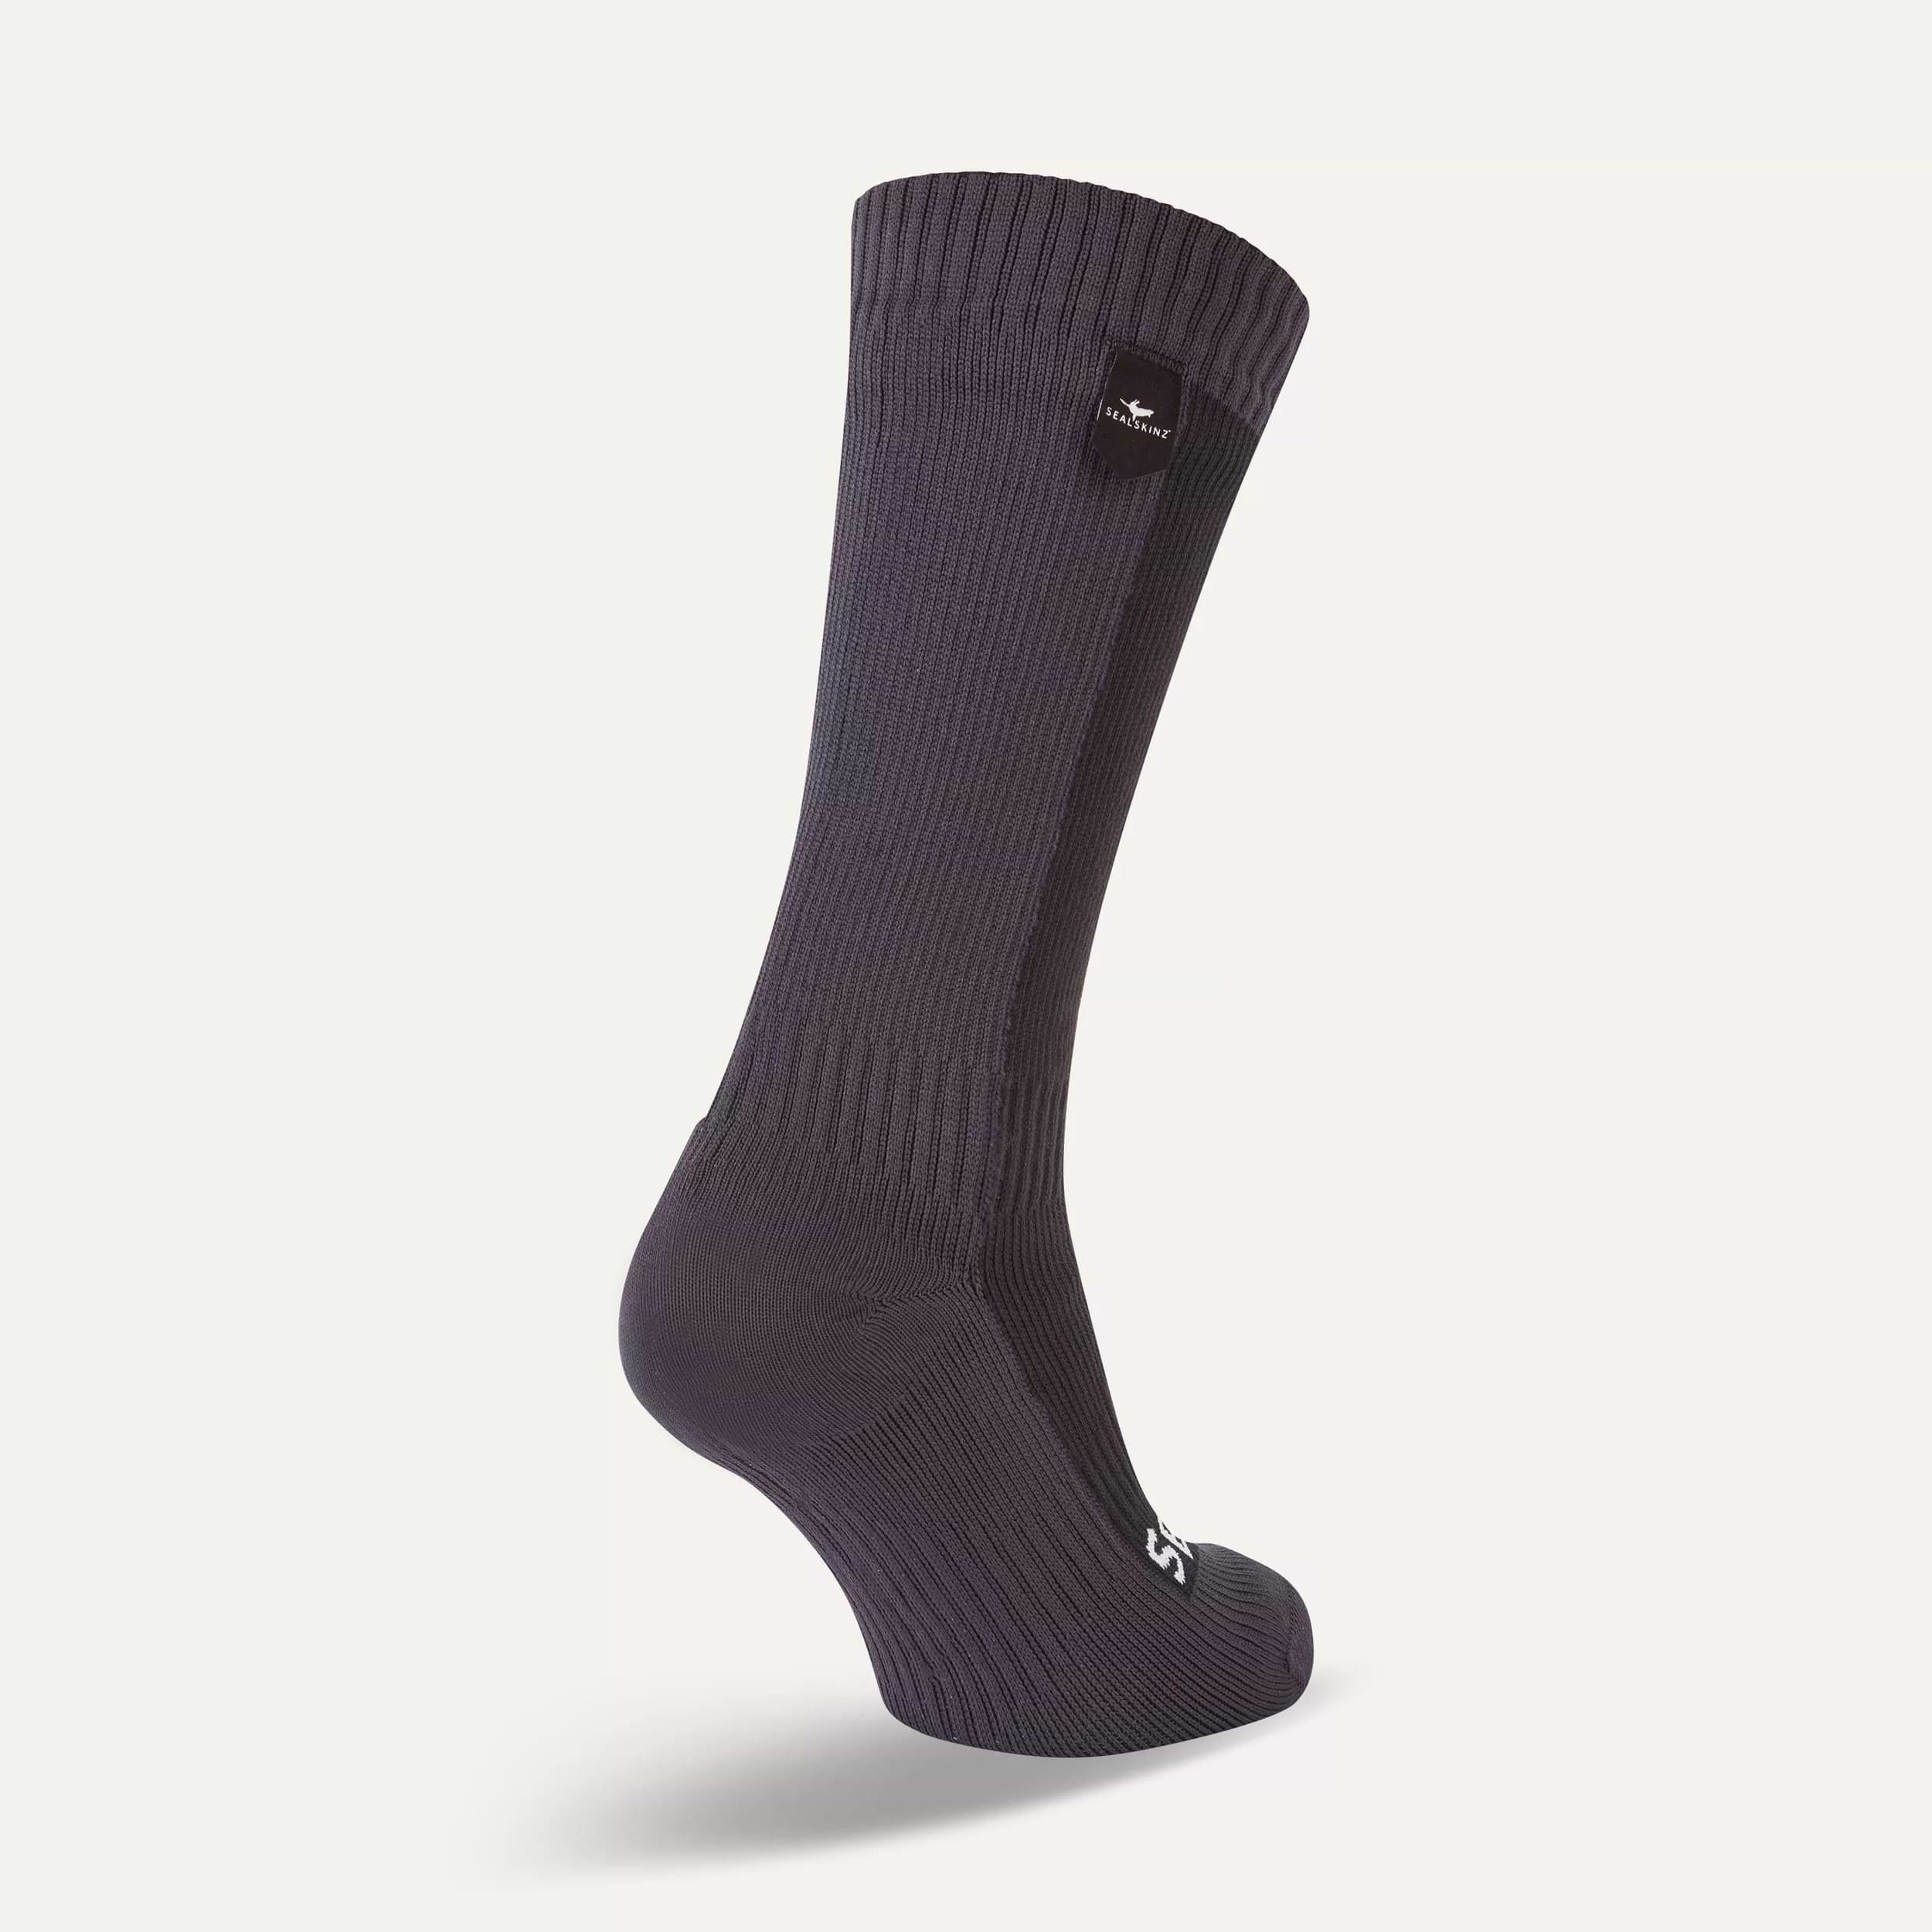 nike grip socks Football Size Lg